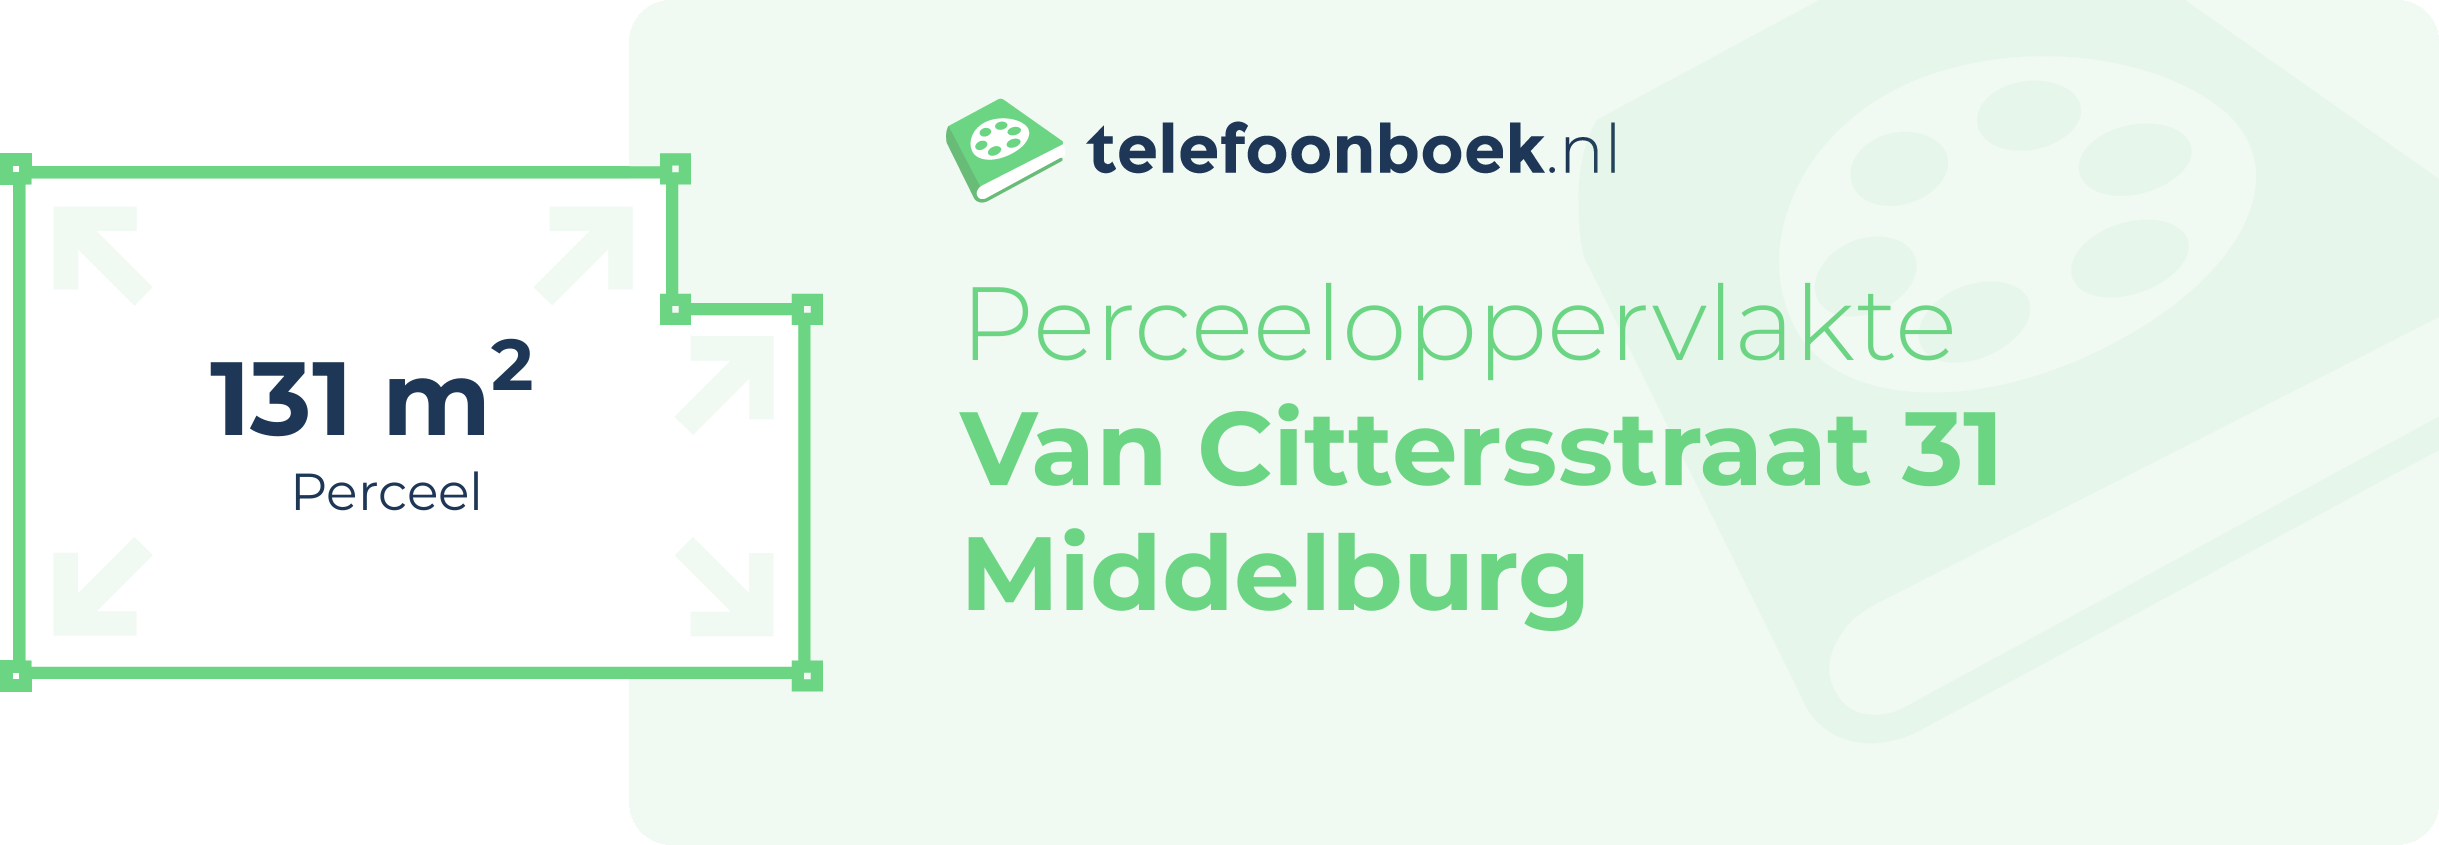 Perceeloppervlakte Van Cittersstraat 31 Middelburg